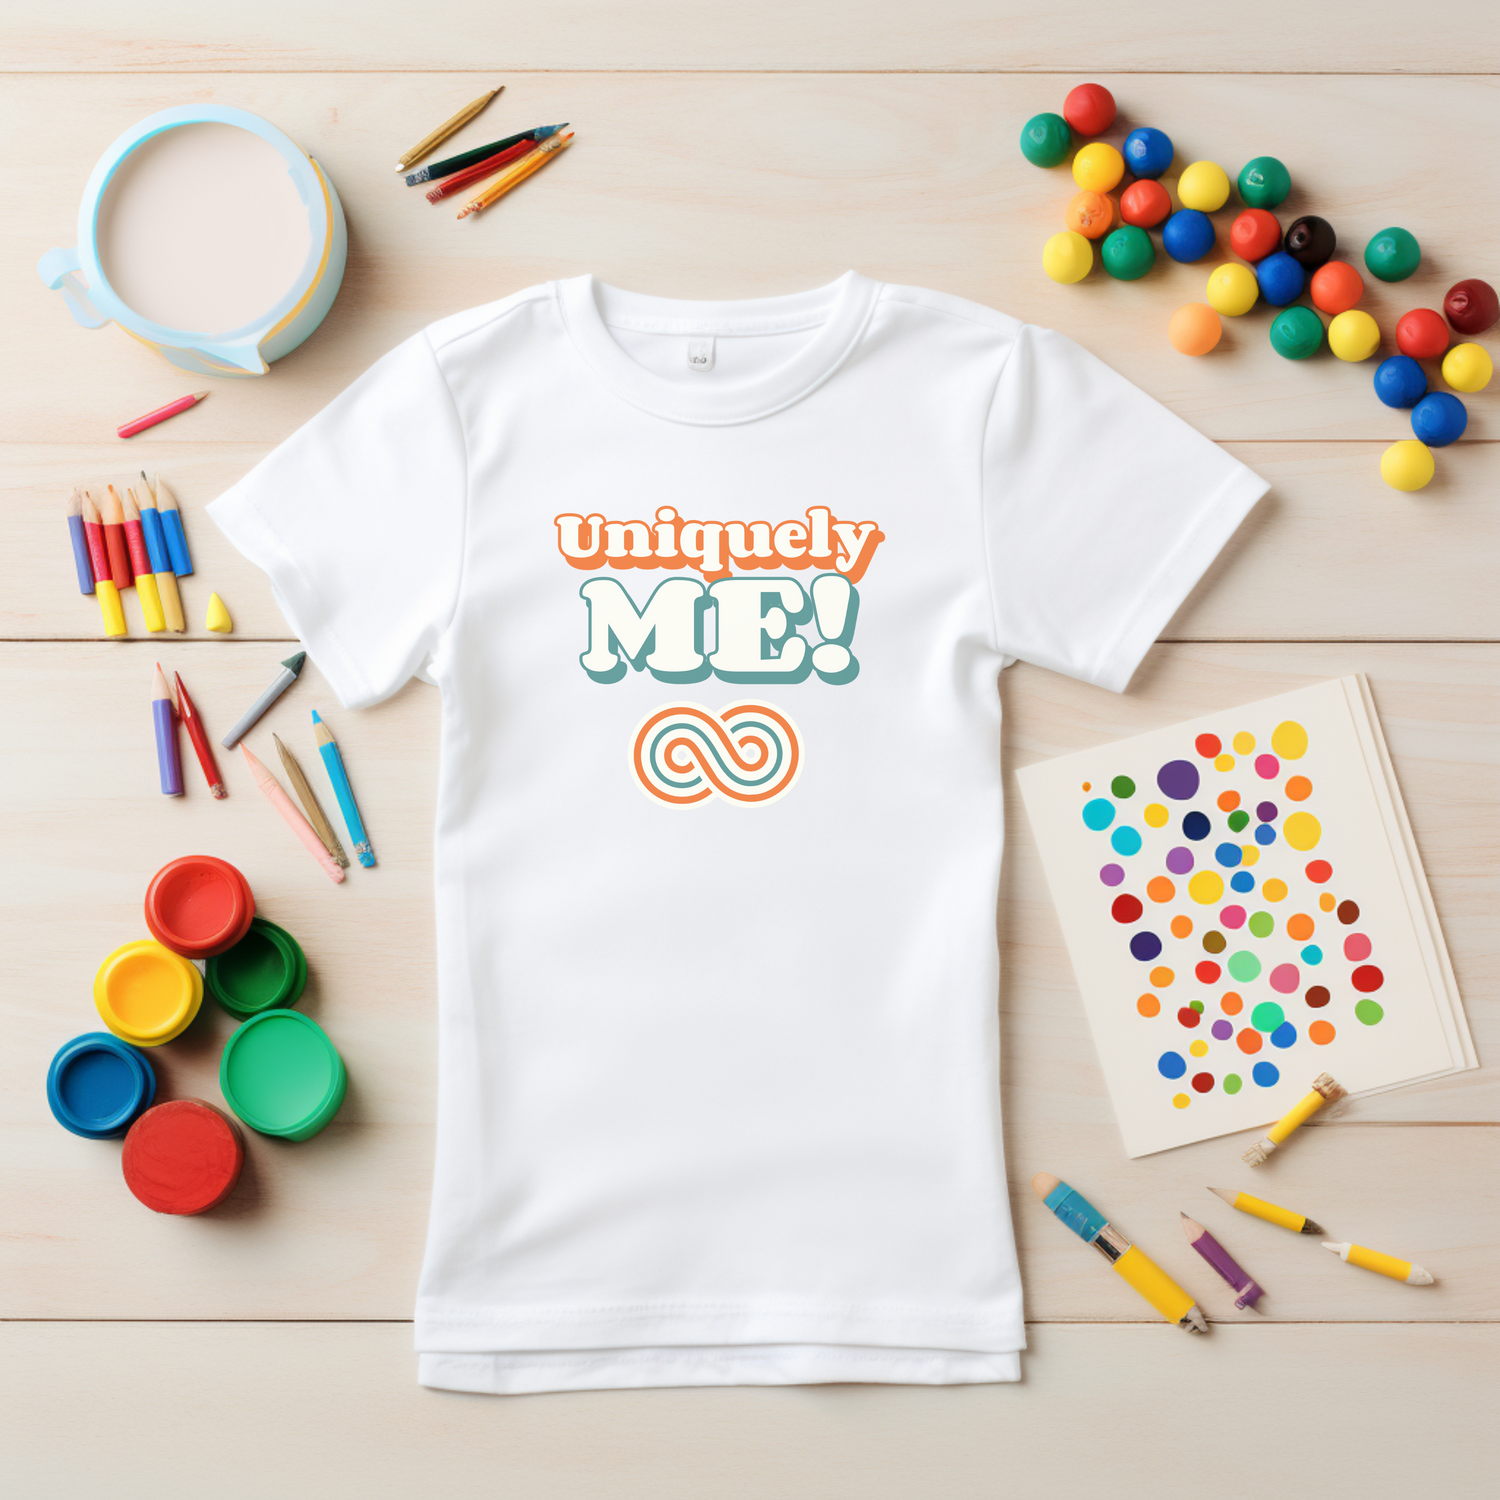 Uniquely ME! Autism Awareness Tshirt for Kids - Celebrate Neurodiversity - Cute Autism Shirt for Kids - Embrace Your Diff